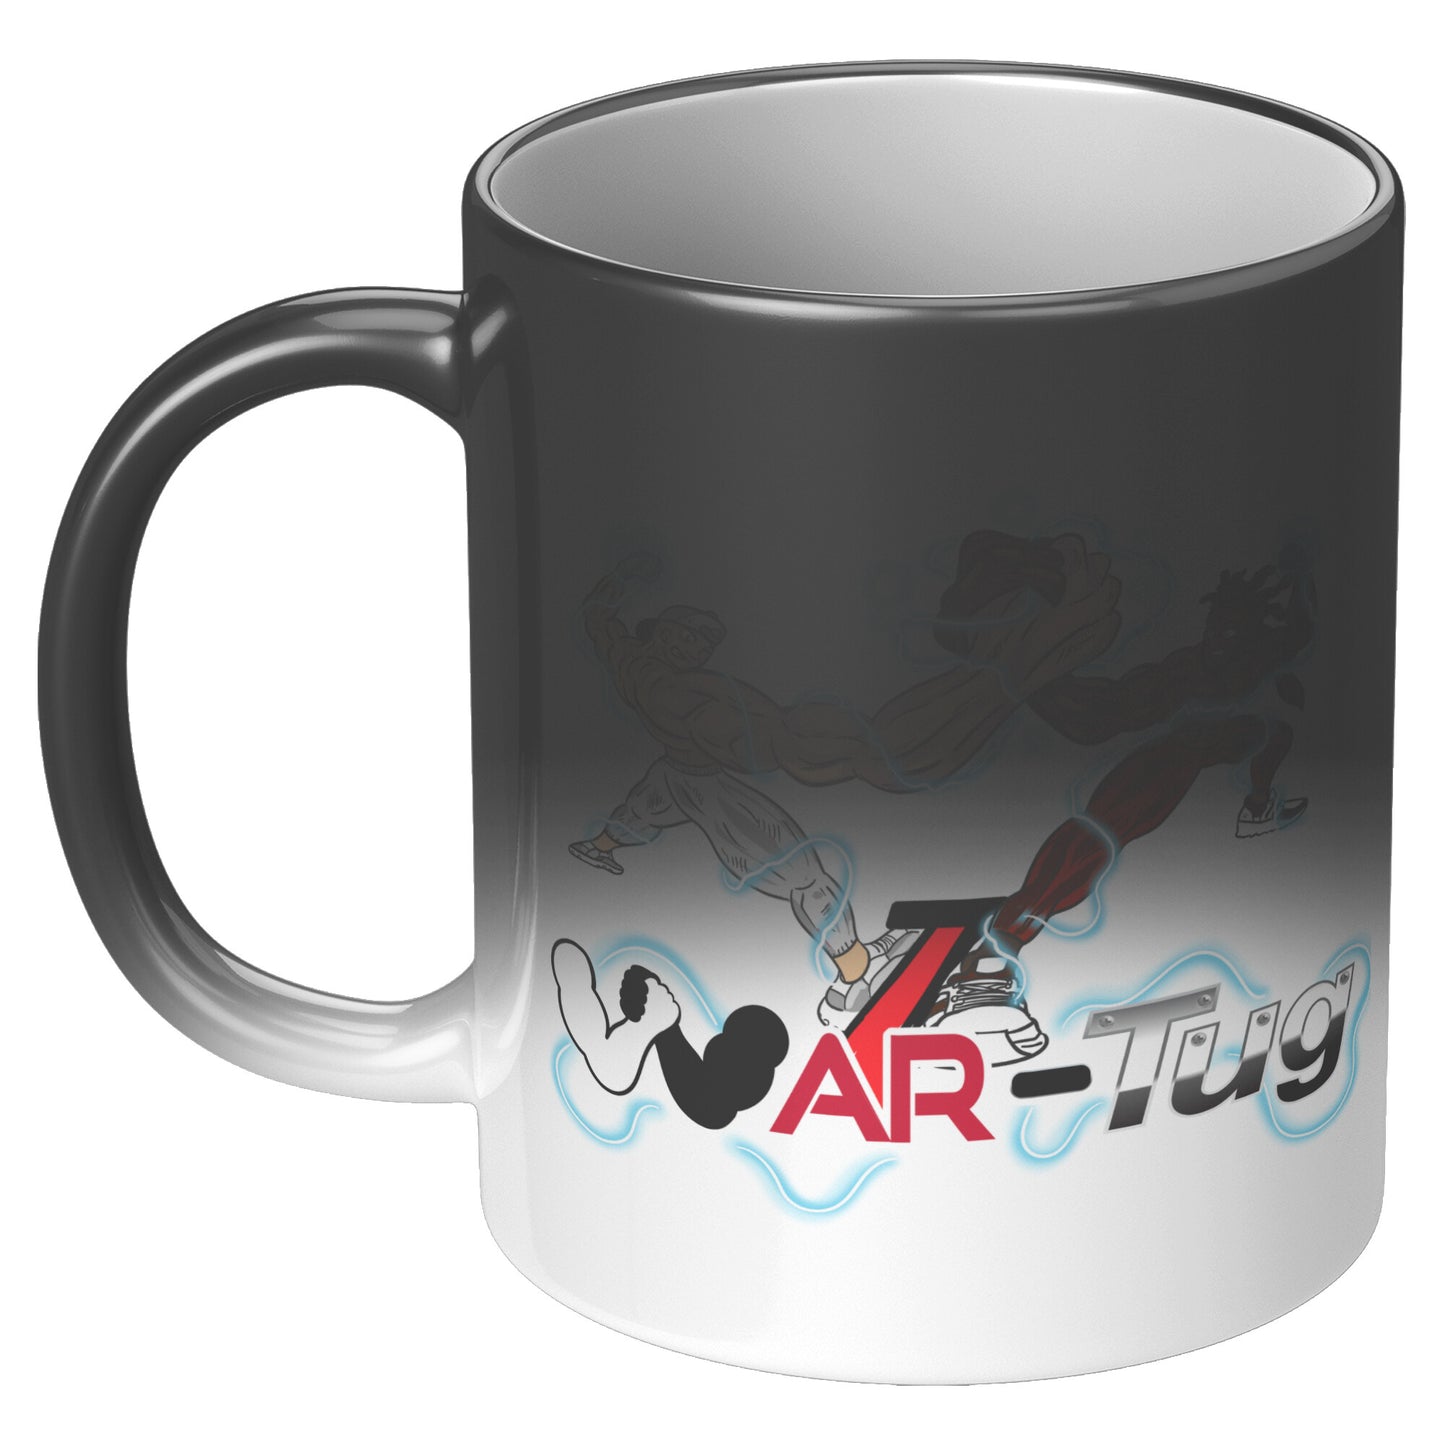 War-Tug Magic Coffee Mug